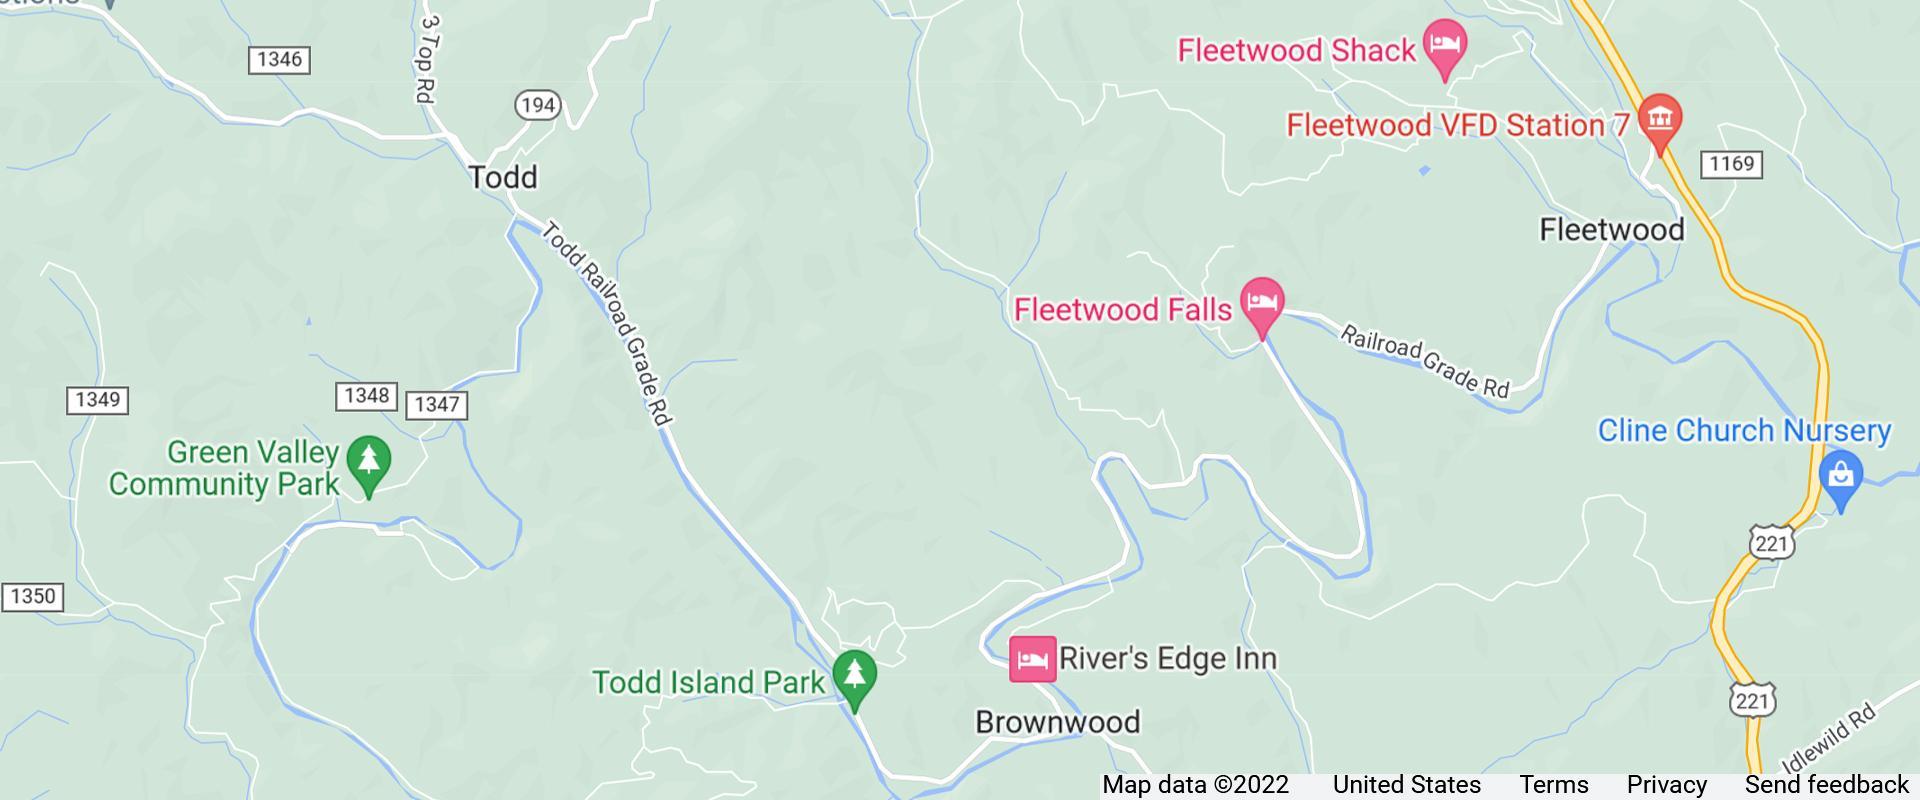 map of fleetwood north carolina